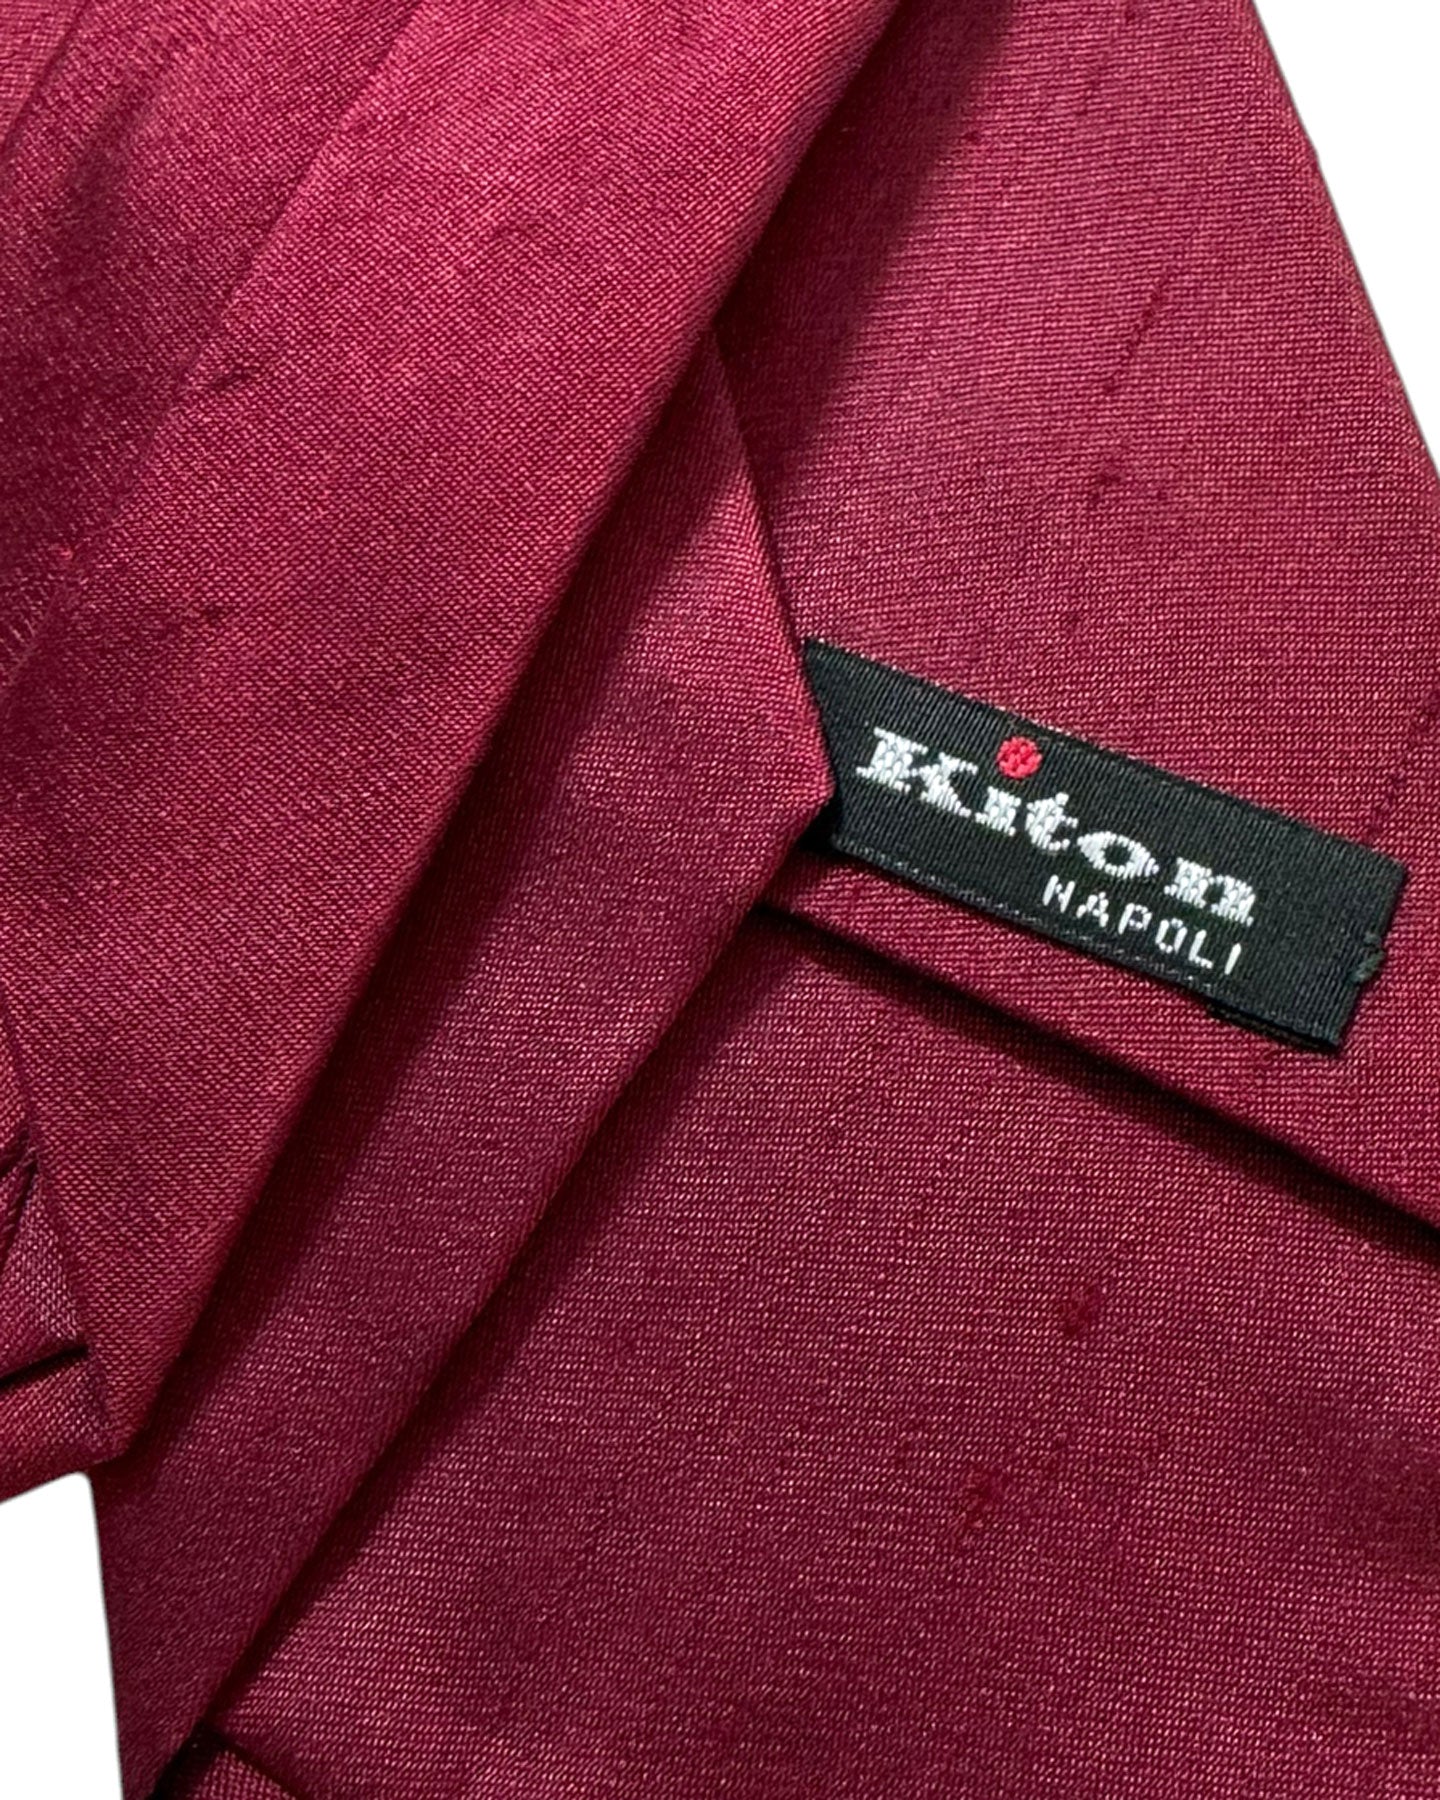 Kiton Silk Tie Bordeaux Solid Design - Sevenfold Necktie